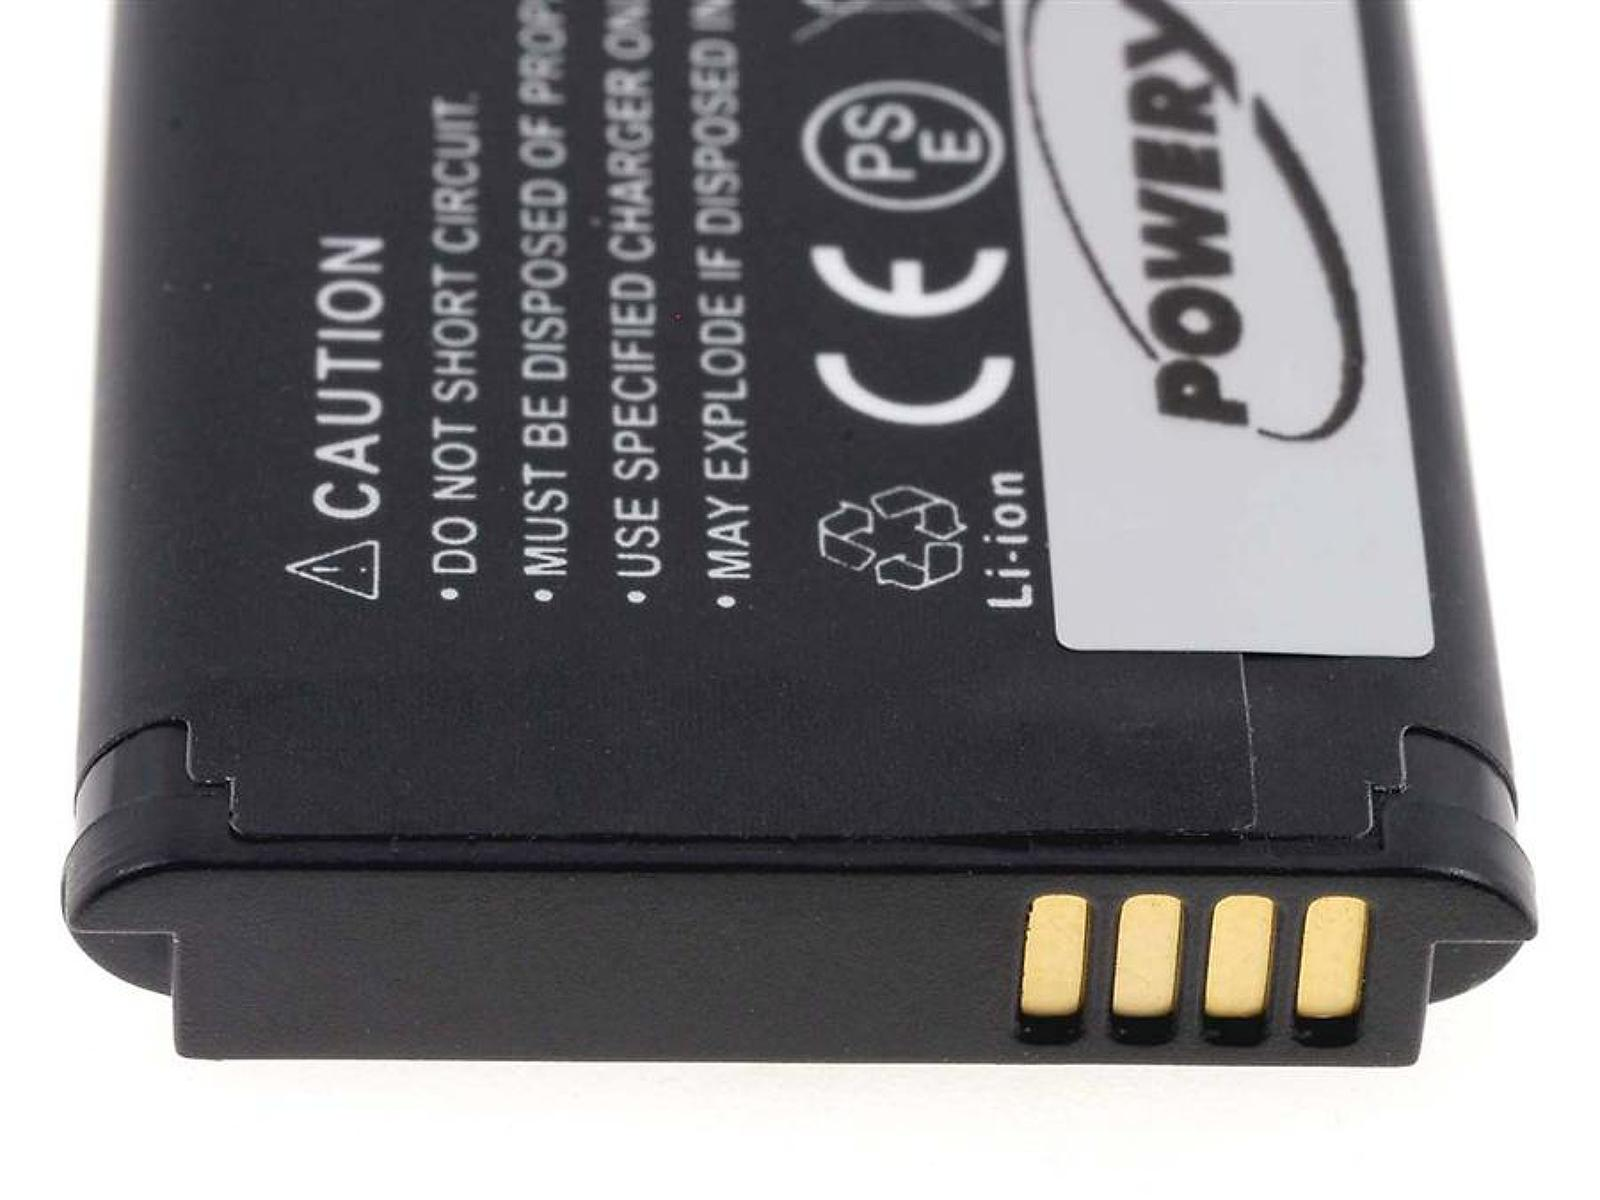 POWERY Akku für Volt, 620mAh 3.7 Li-Ion Samsung ST60 Akku